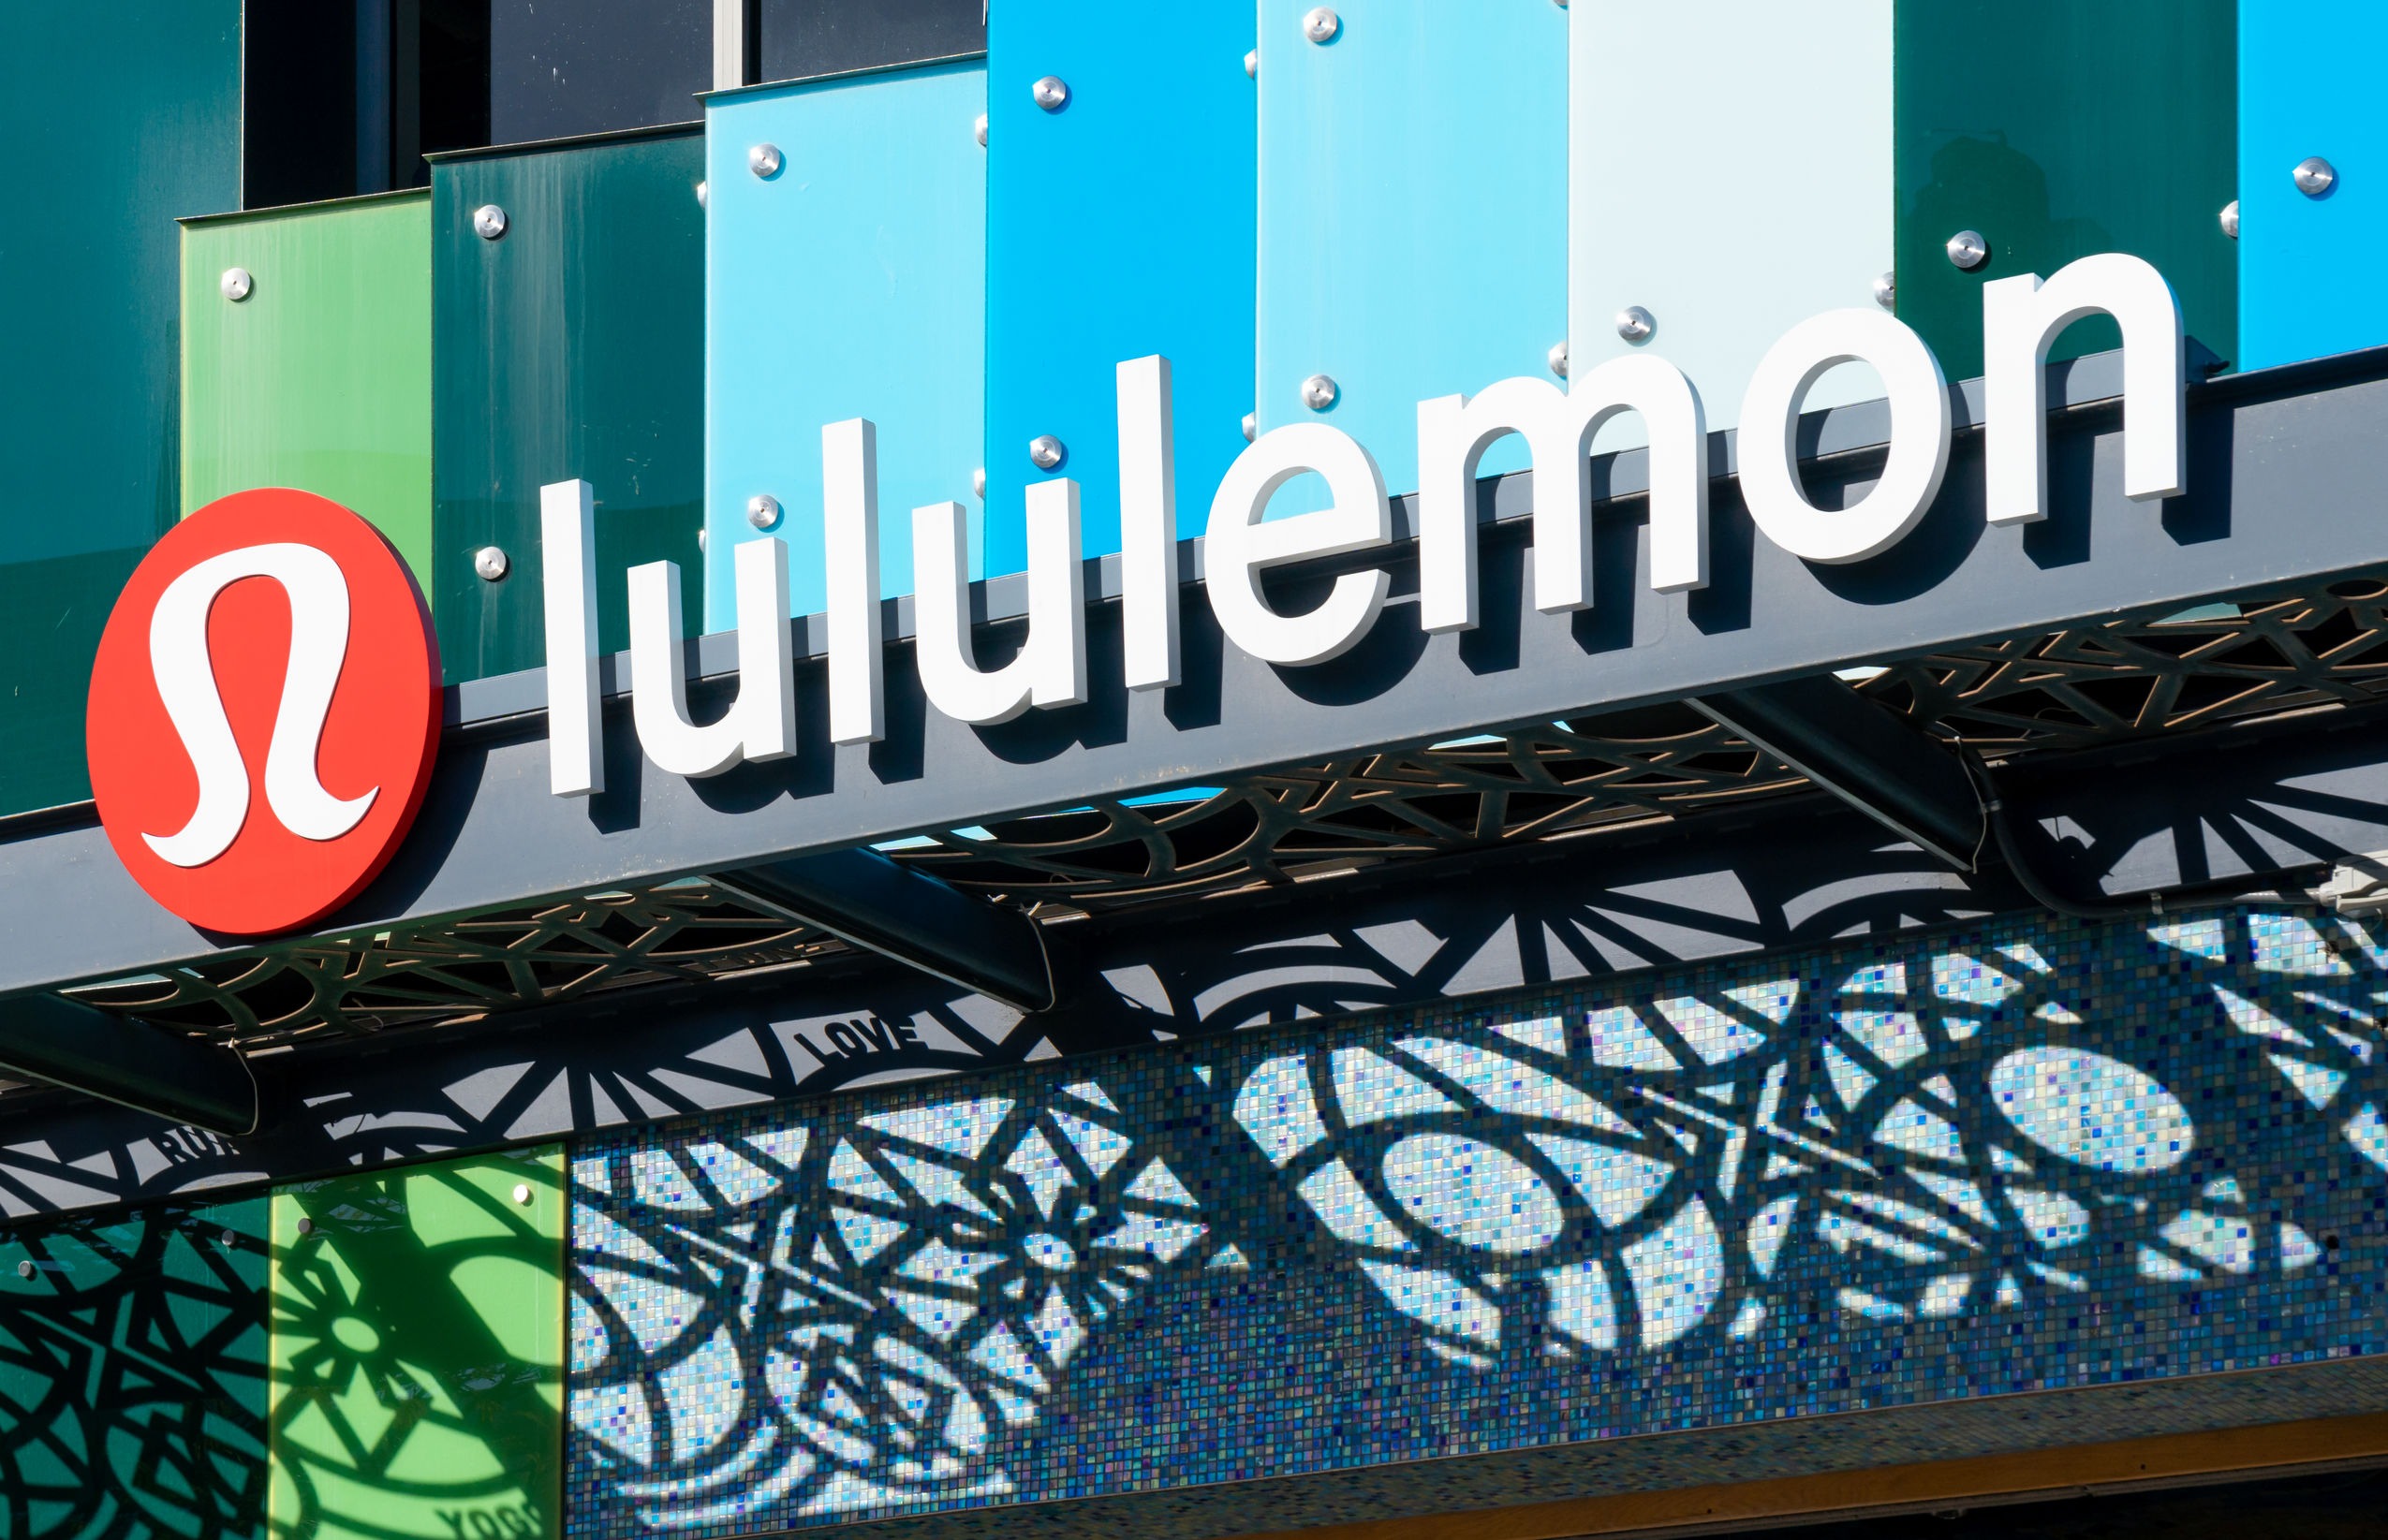 Best Lululemon store in NJ? : r/lululemon